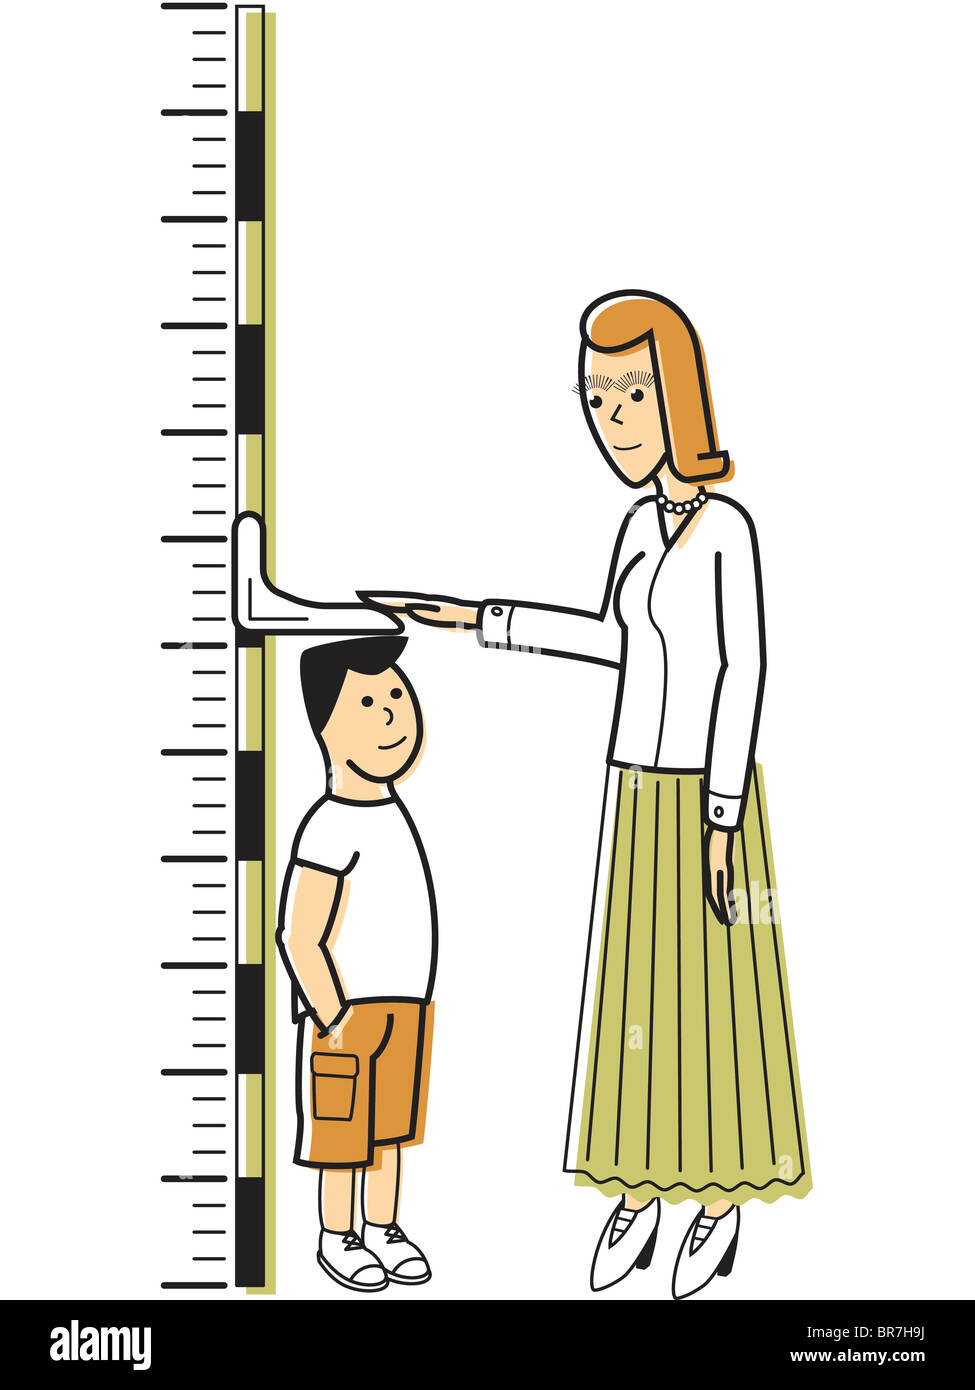 https://c8.alamy.com/comp/BR7H9J/a-woman-measuring-a-boy-against-a-growth-chart-BR7H9J.jpg